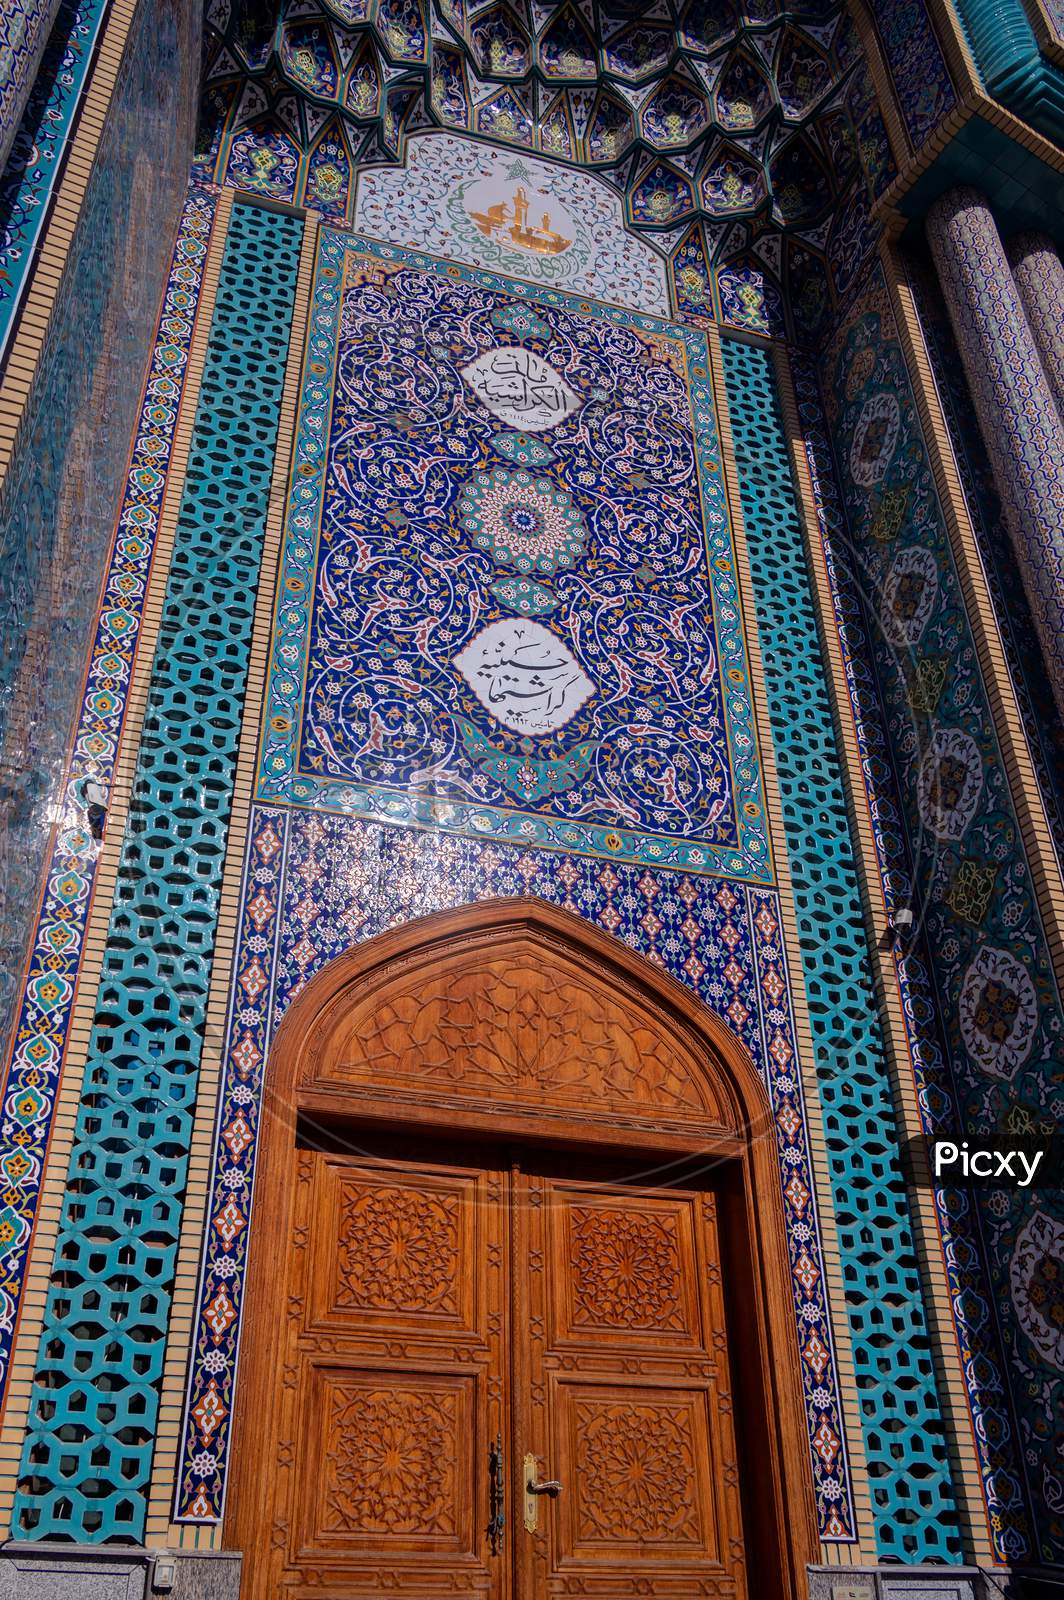 Feb 27Th, 2021, Bur Dubai, Uae. View Of The Beautiful Iranian Mosque With Intricate Designs And Wooden Entrance Door Captured At Bur Dubai, Uae.